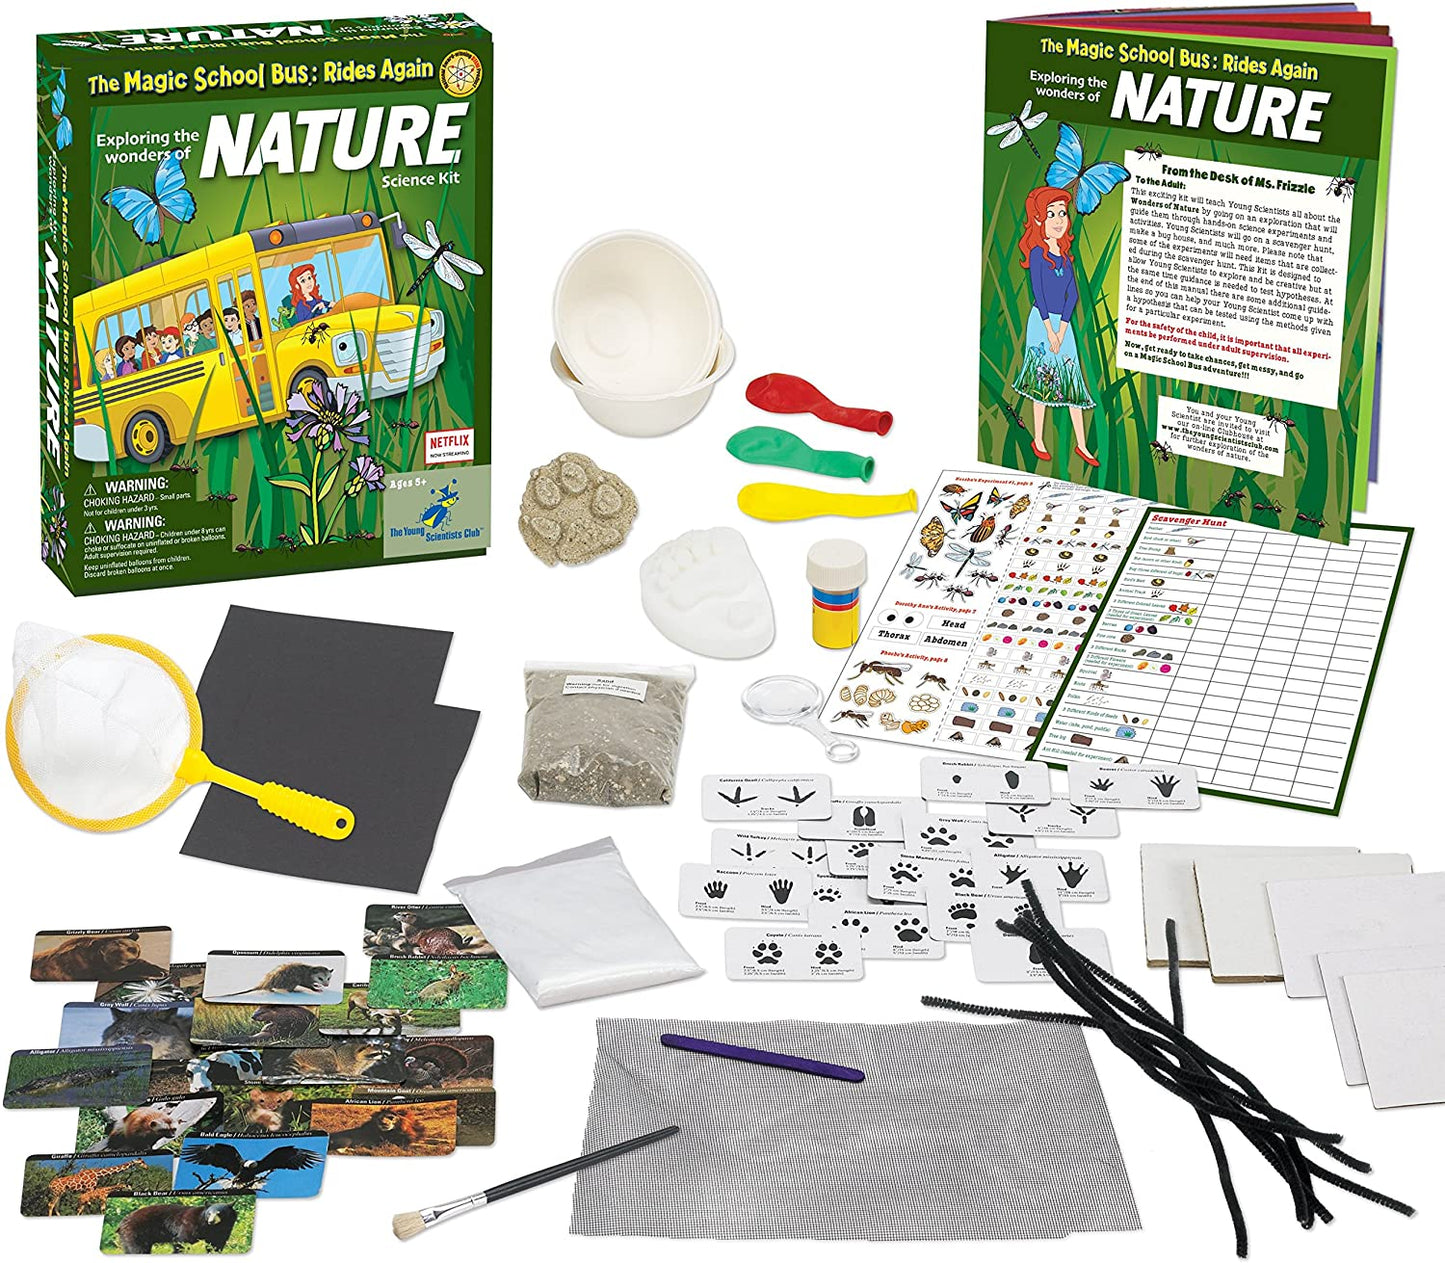 Explore the Wonders of Nature Science Kit